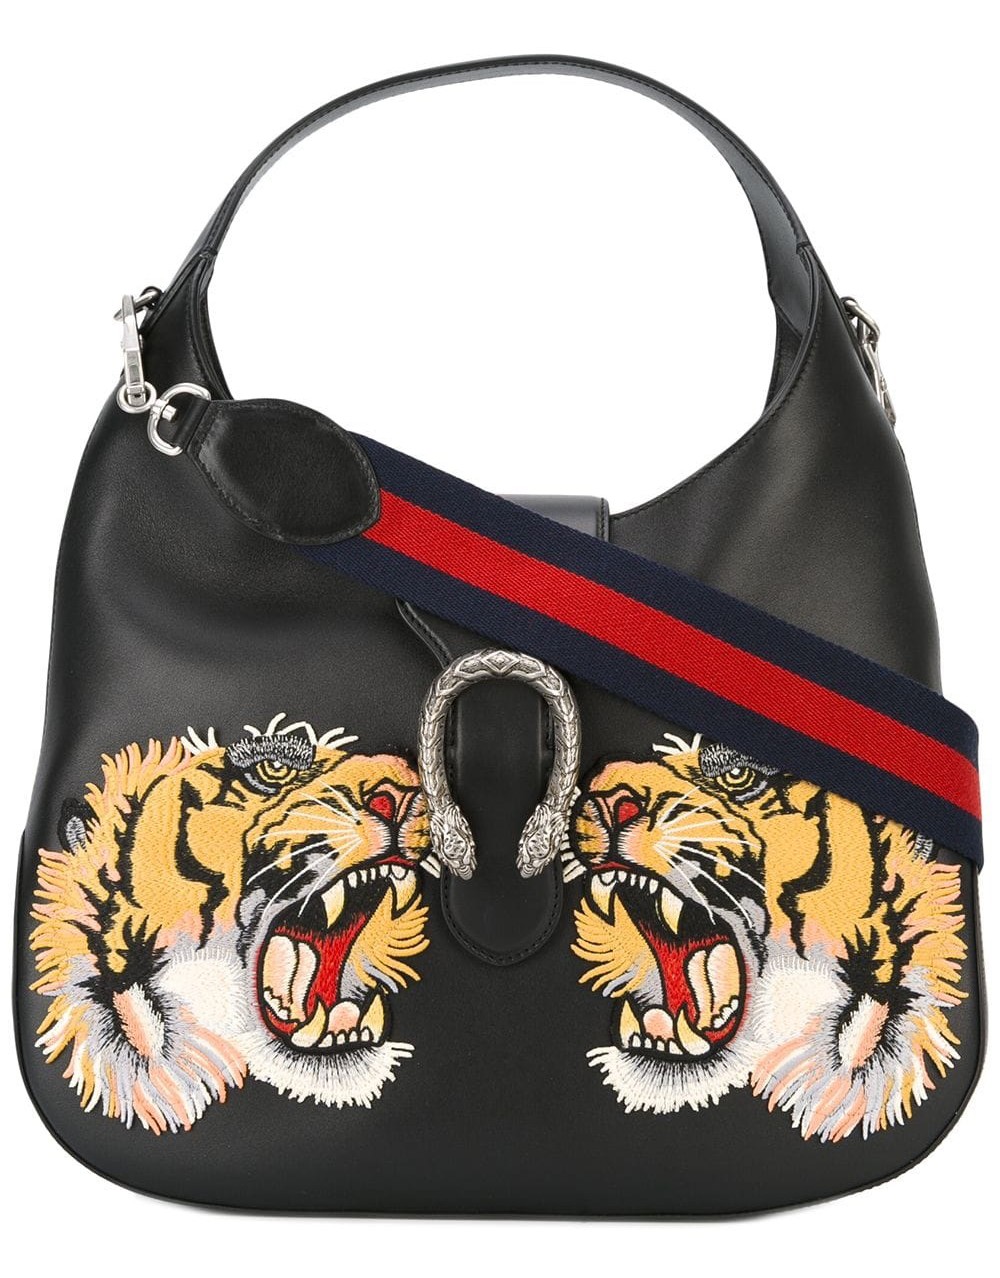 Fashionable & Elegant Black Dionysus Style Bag, With Chain Strap